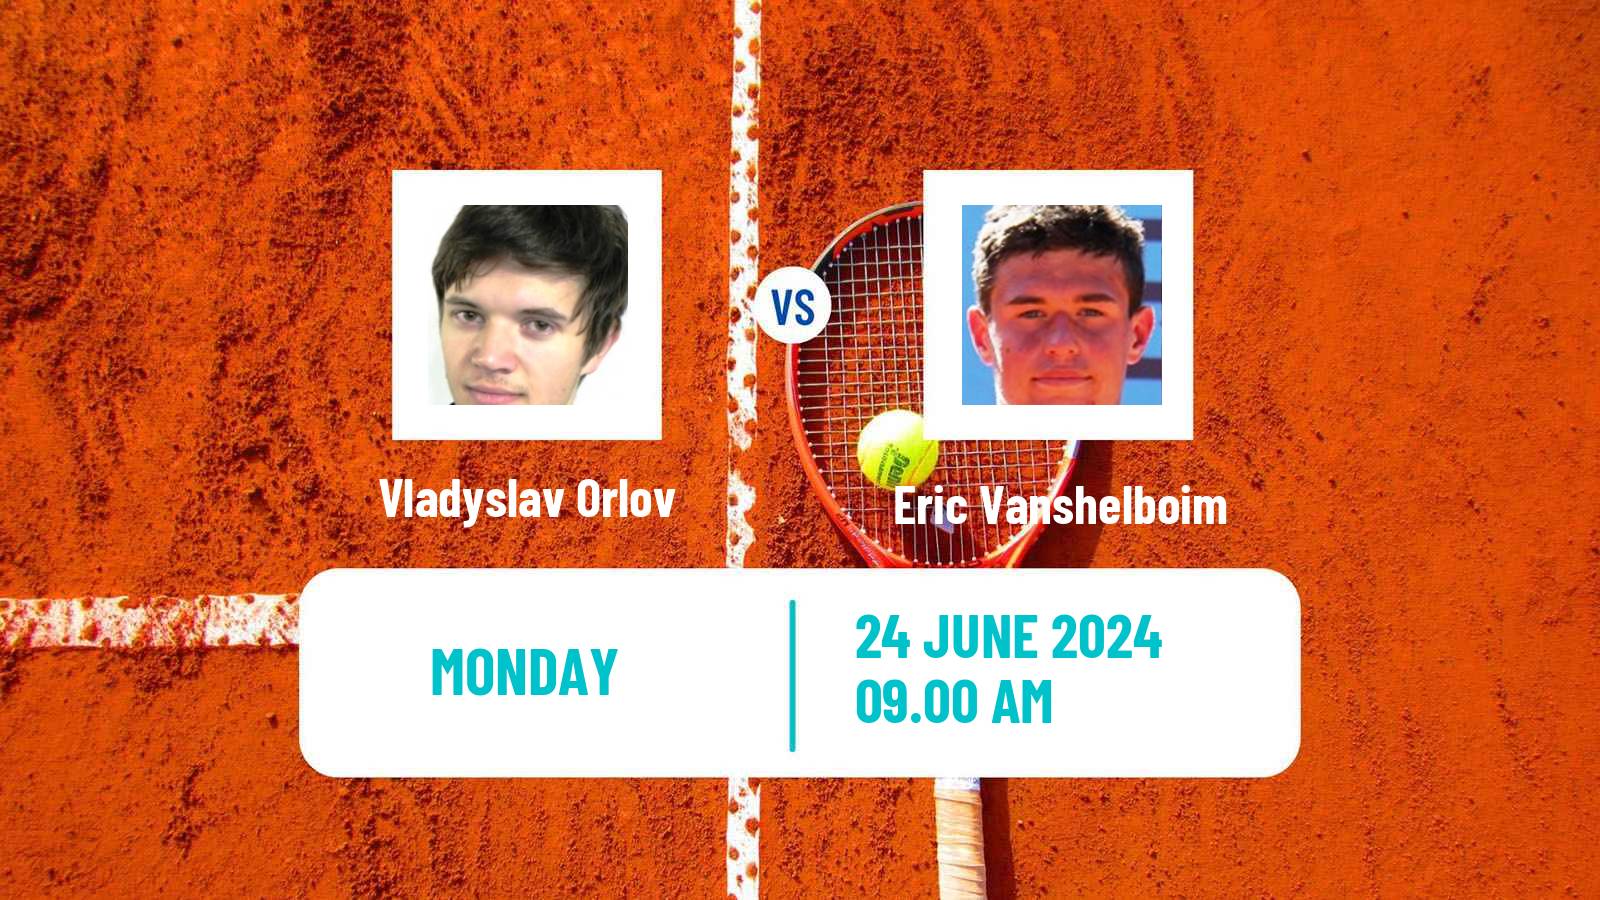 Tennis ITF M25 Satu Mare Men 2024 Vladyslav Orlov - Eric Vanshelboim